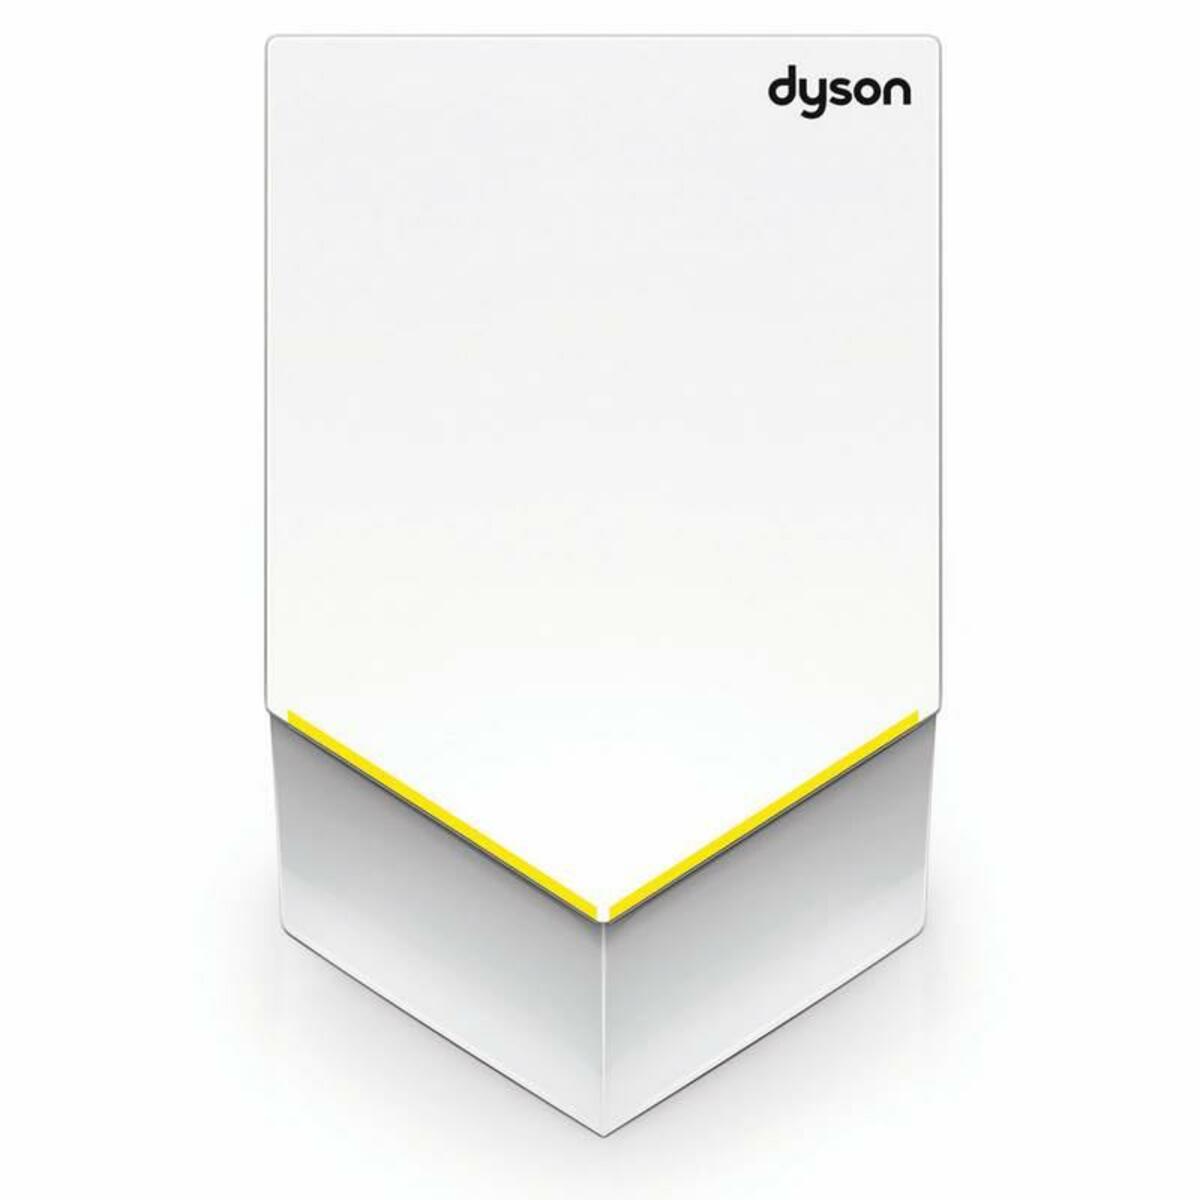 Sèche-mains Dyson Airblade V Blanc